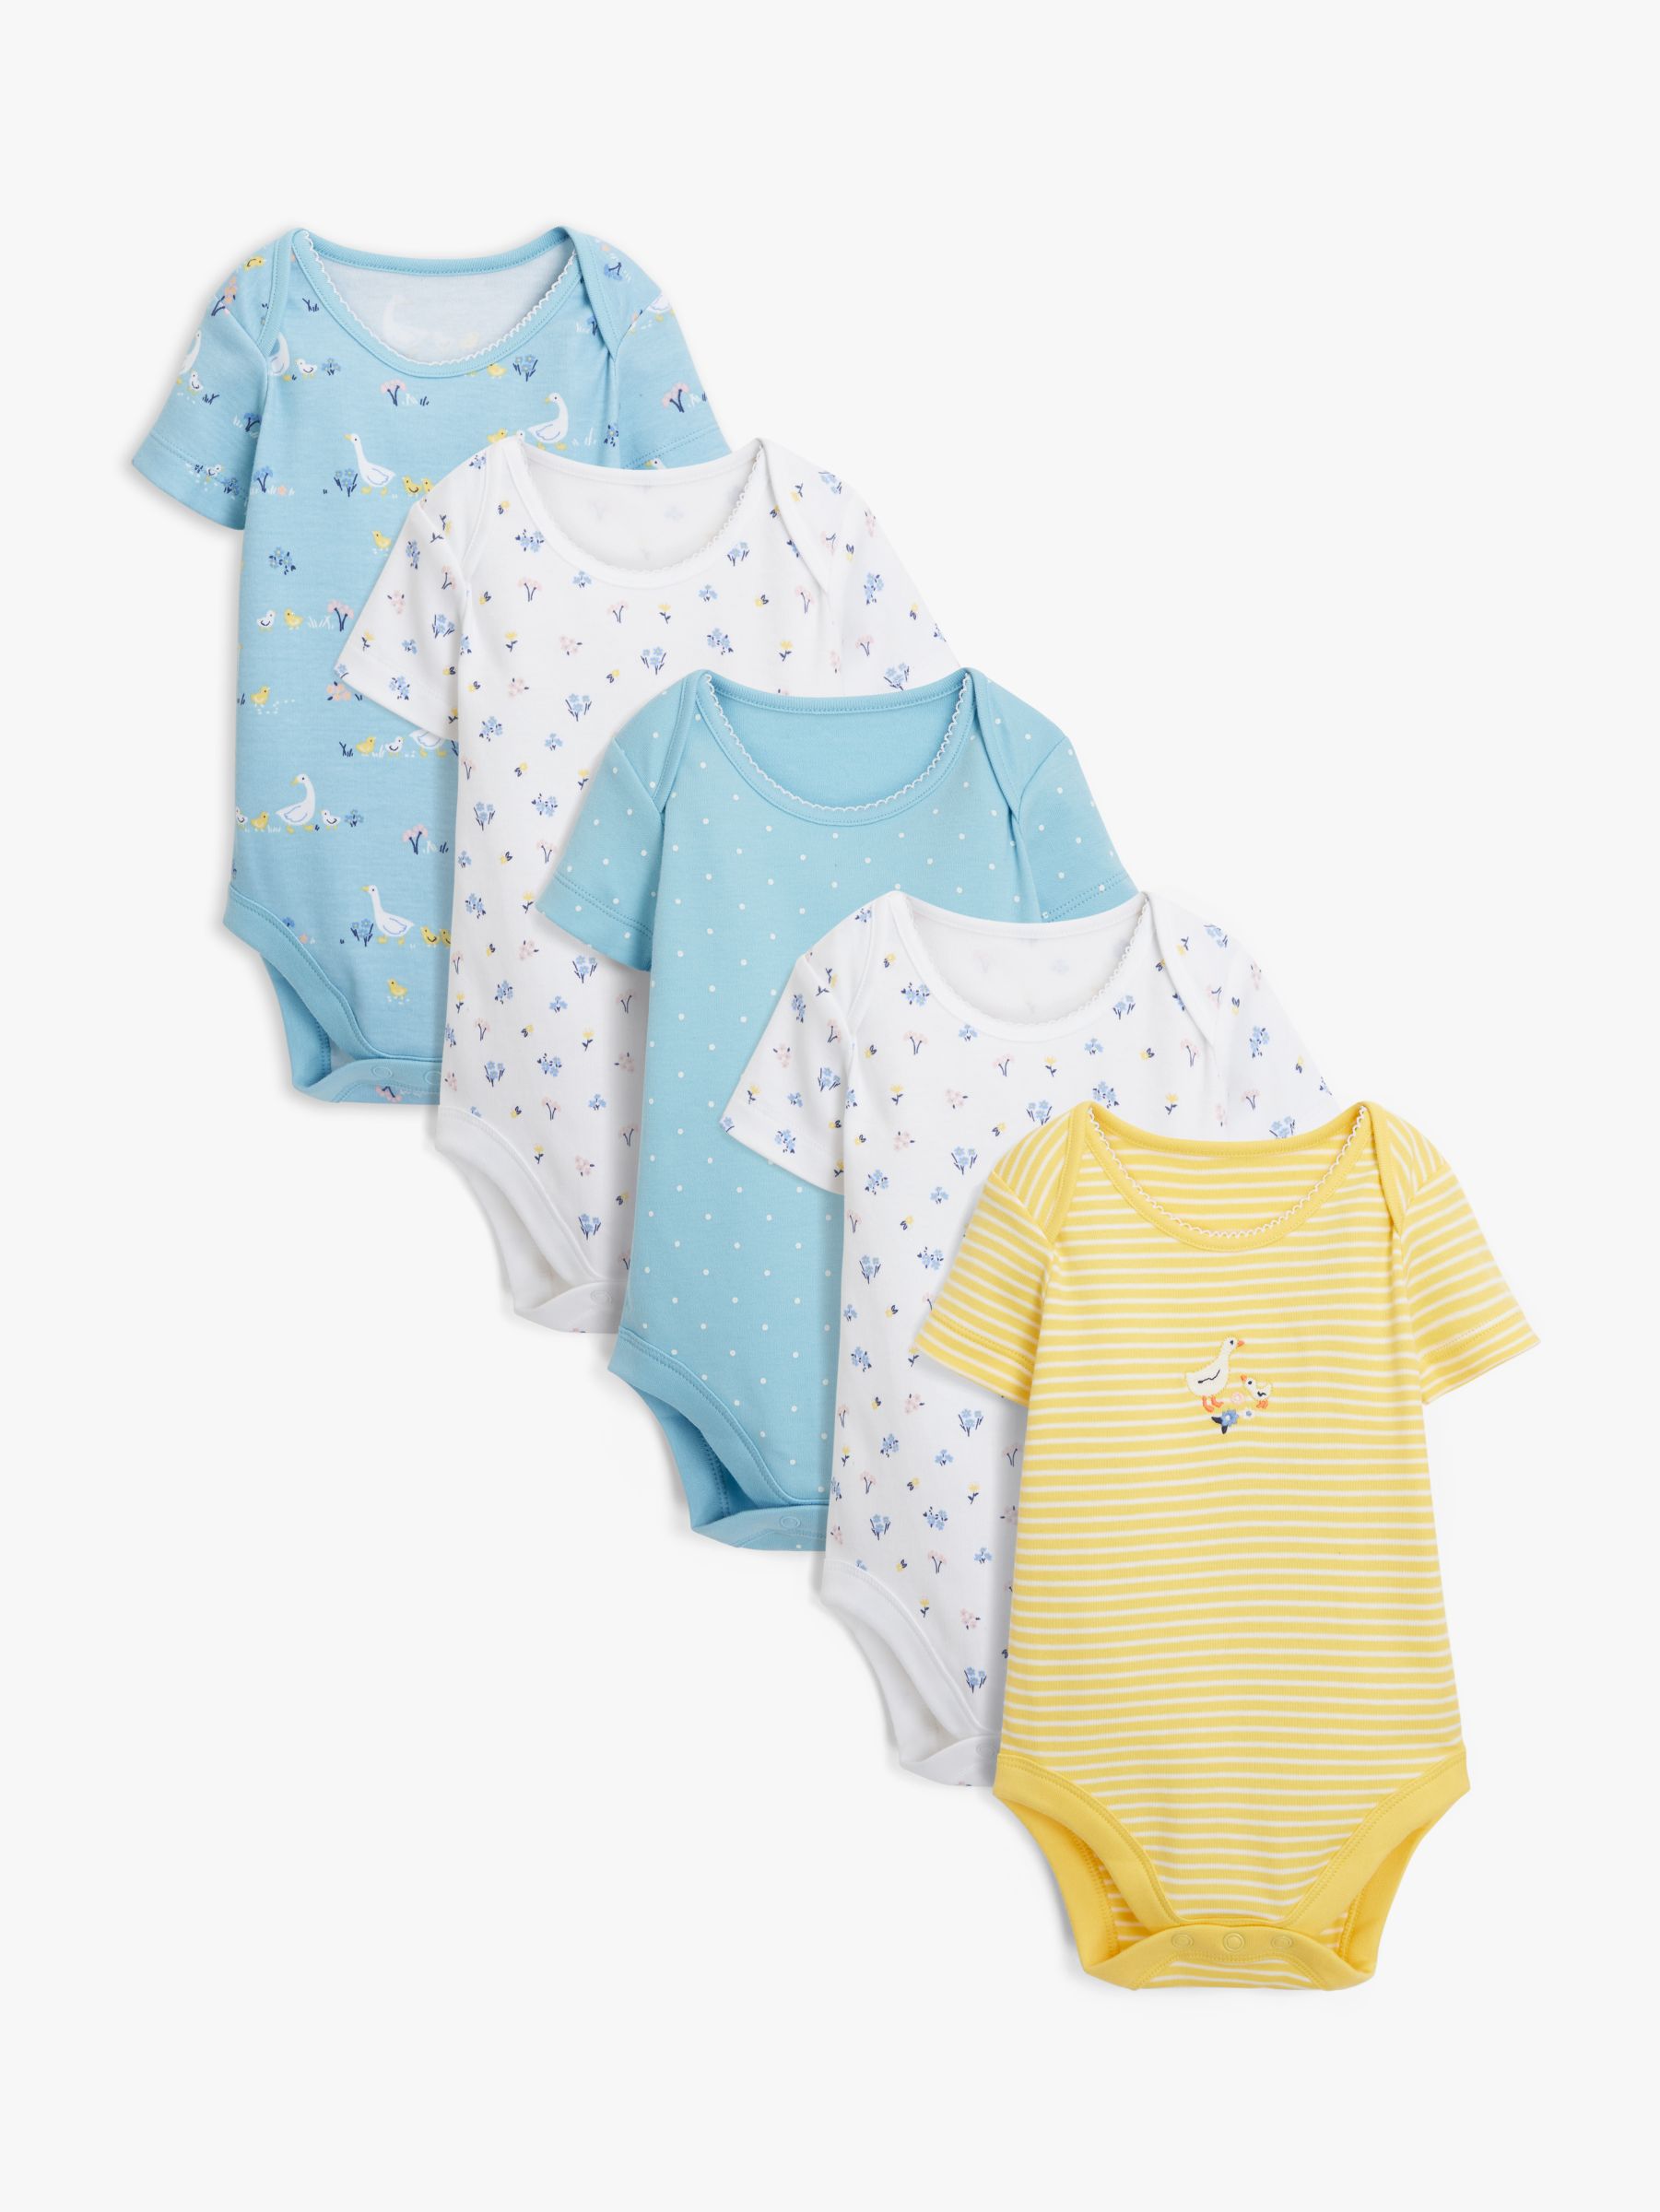 John Lewis & Partners Baby GOTS Organic Cotton Duck Bodysuits, Pack of 5, Green/Yellow